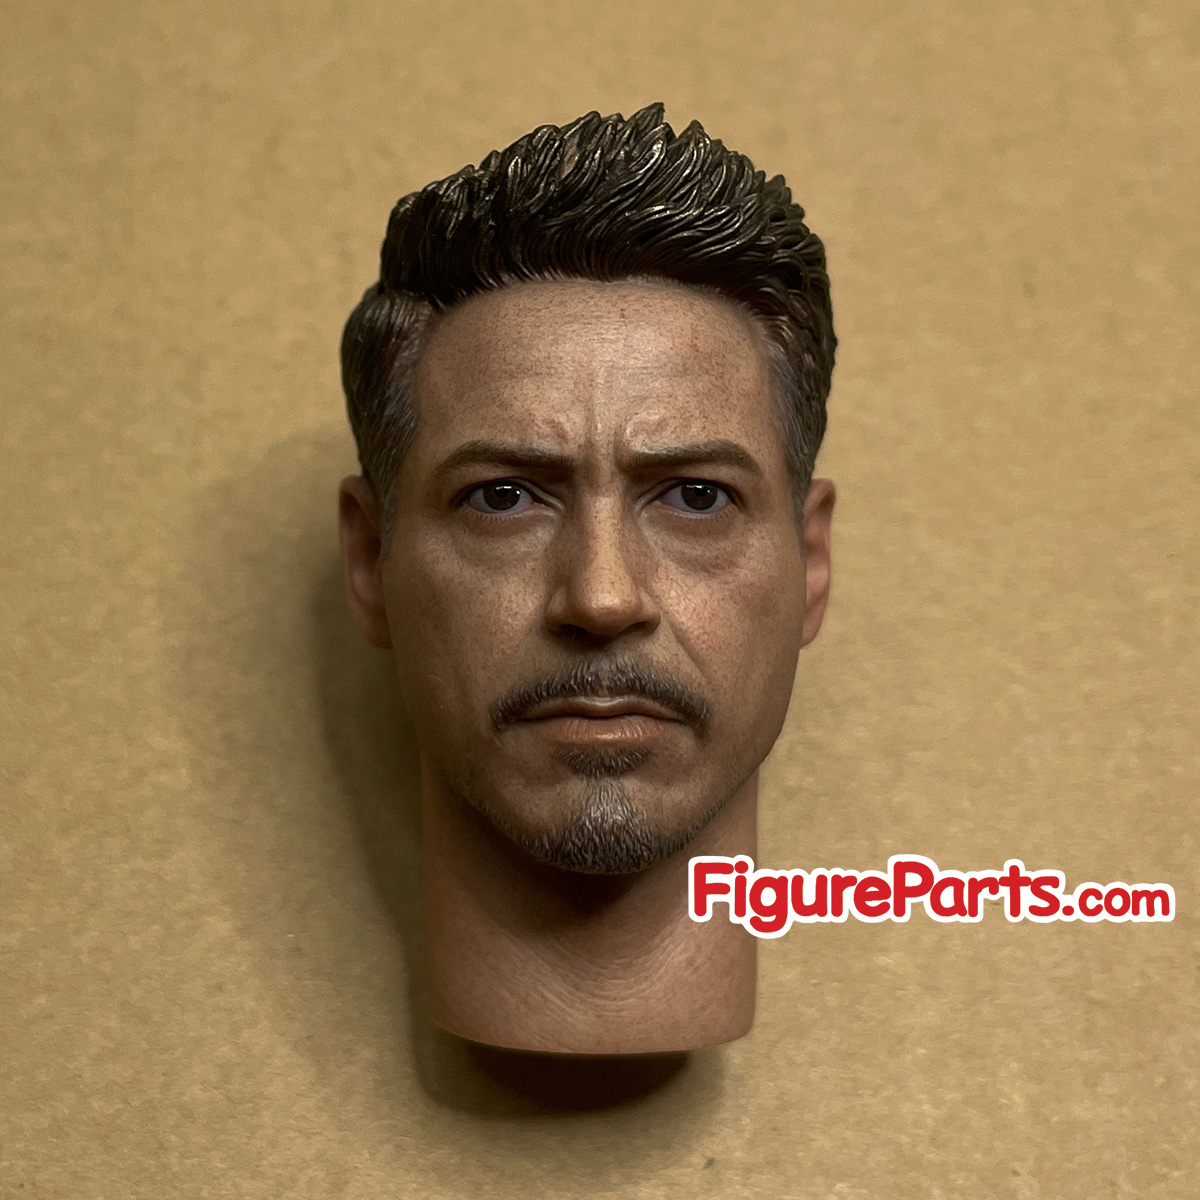 Head Sculpt  - Tony Stark Team Suit - Avengers Endgame - Hot Toys mms537 1